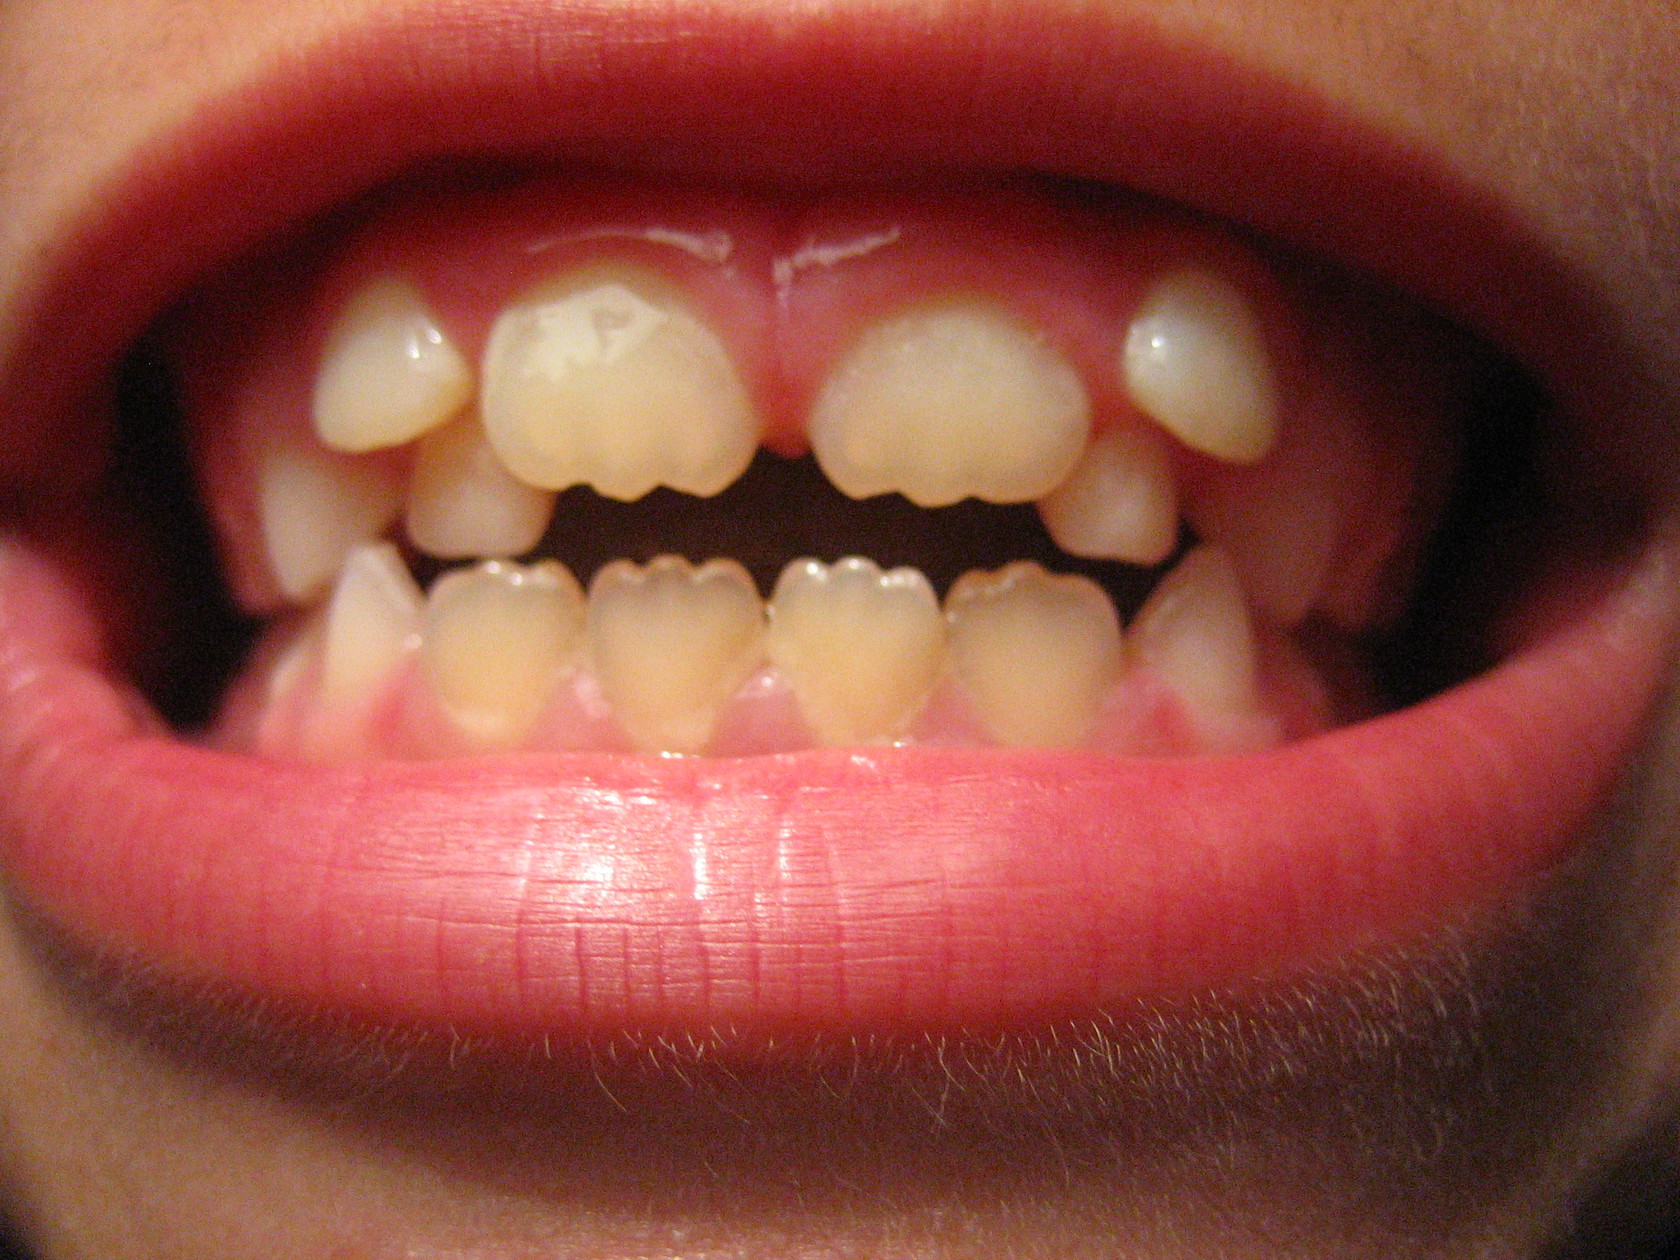 фото коренных зубов у ребенка